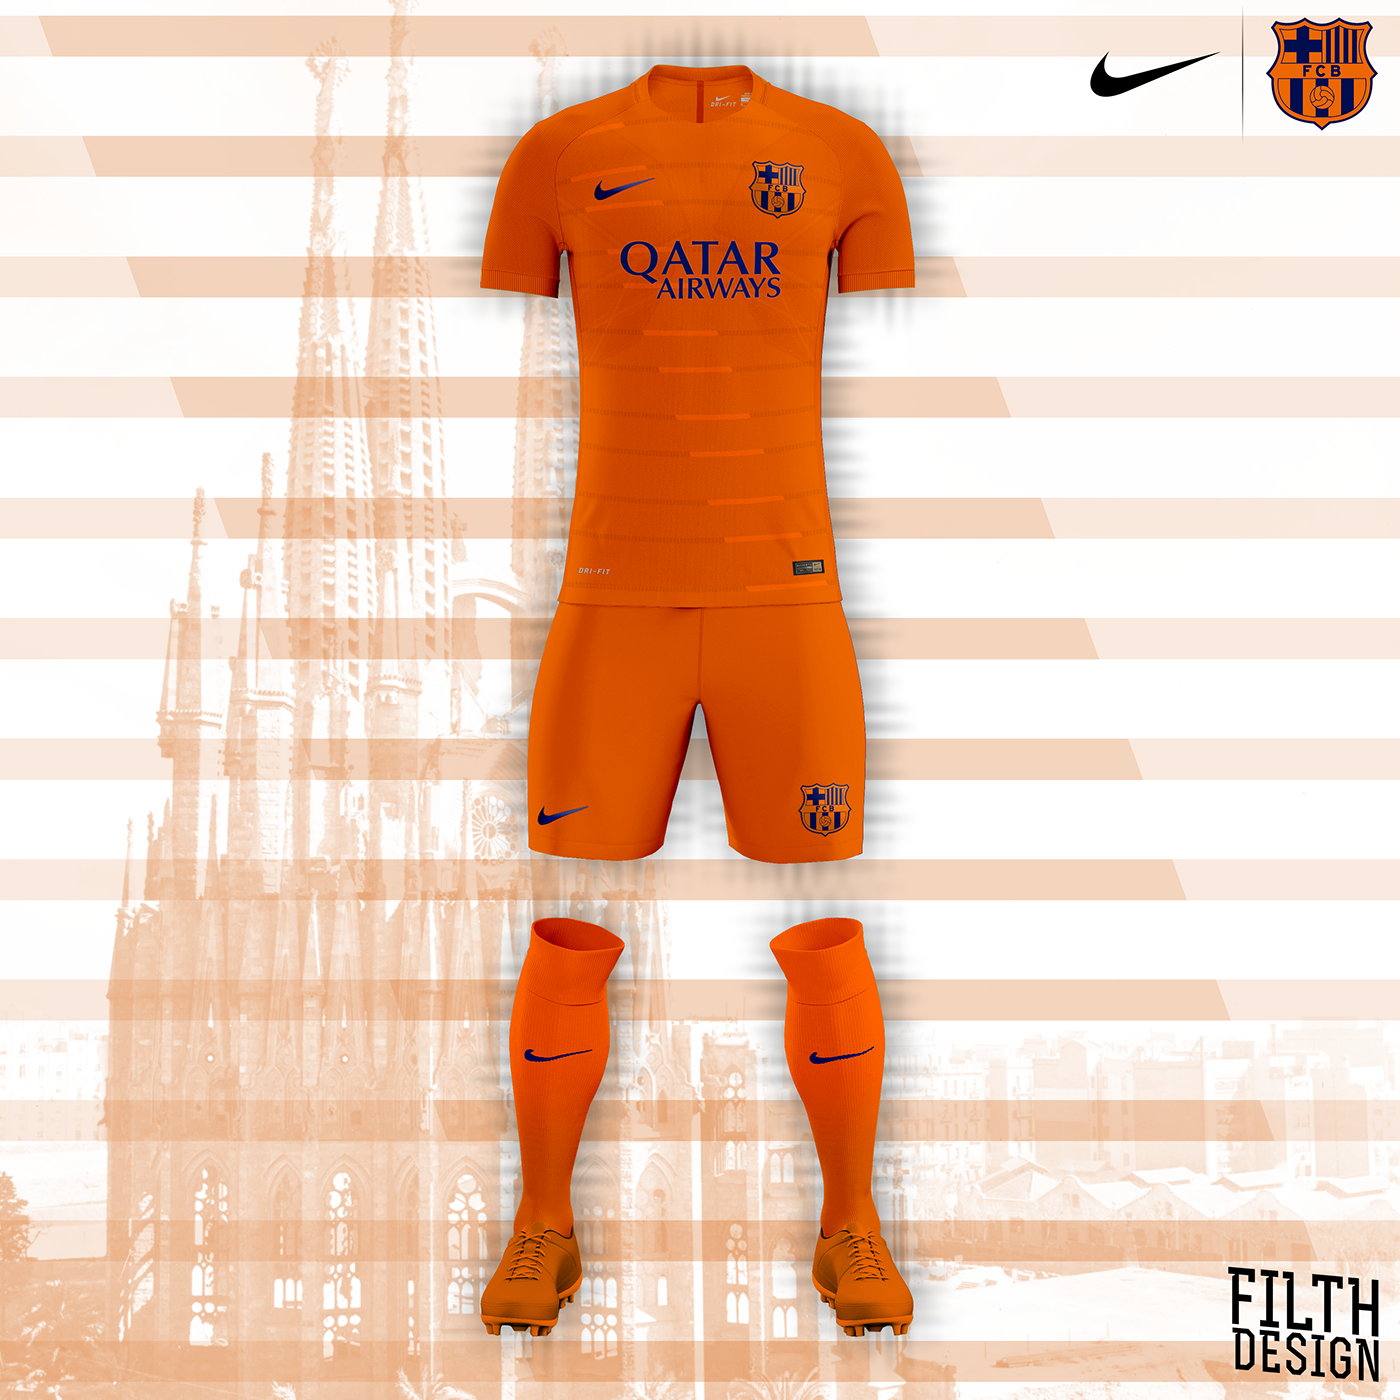 Nike Nike Elite jersey Kit Design barcelona inter Manchester City PSG as roma camiseta